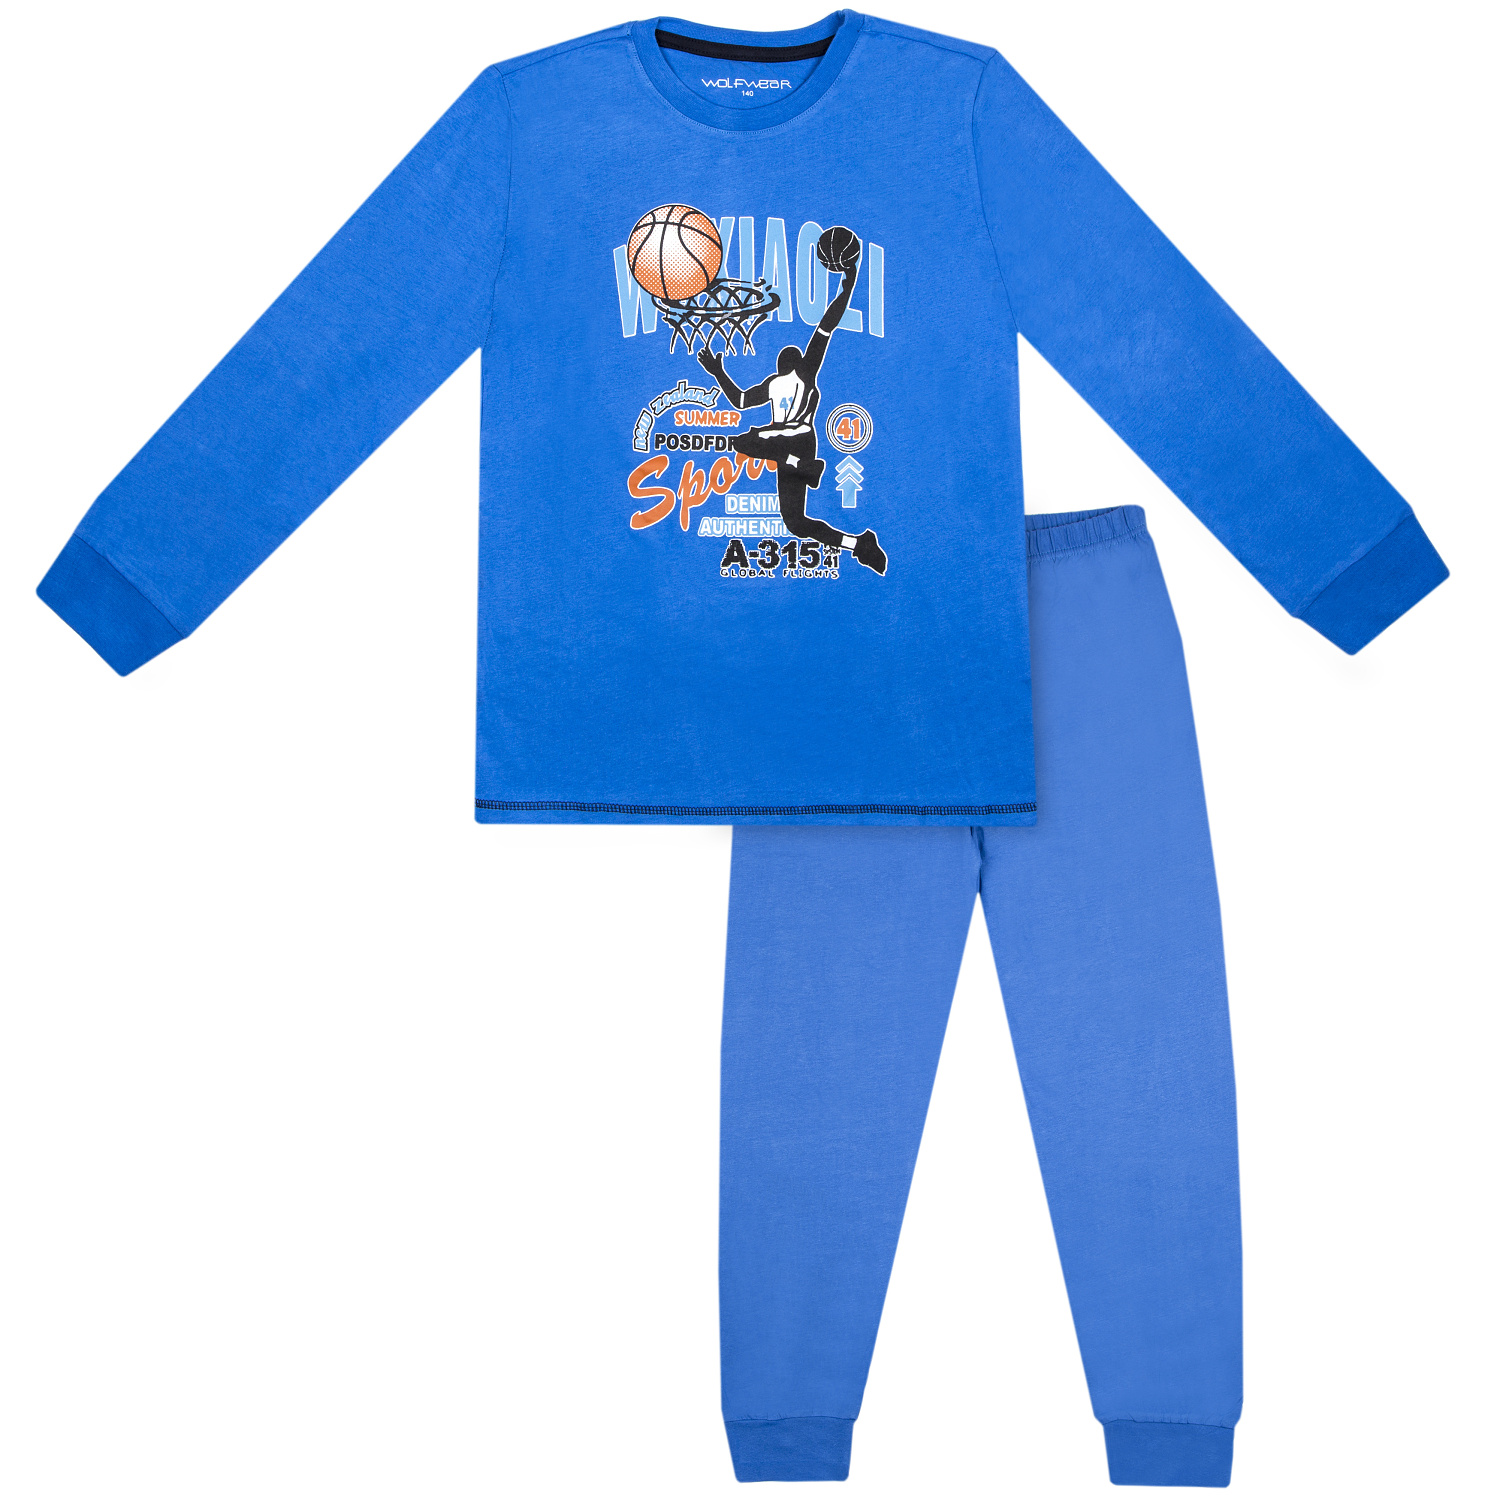 Chlapecké pyžamo - Wolf S2256B, modrá Barva: Modrá, Velikost: 158